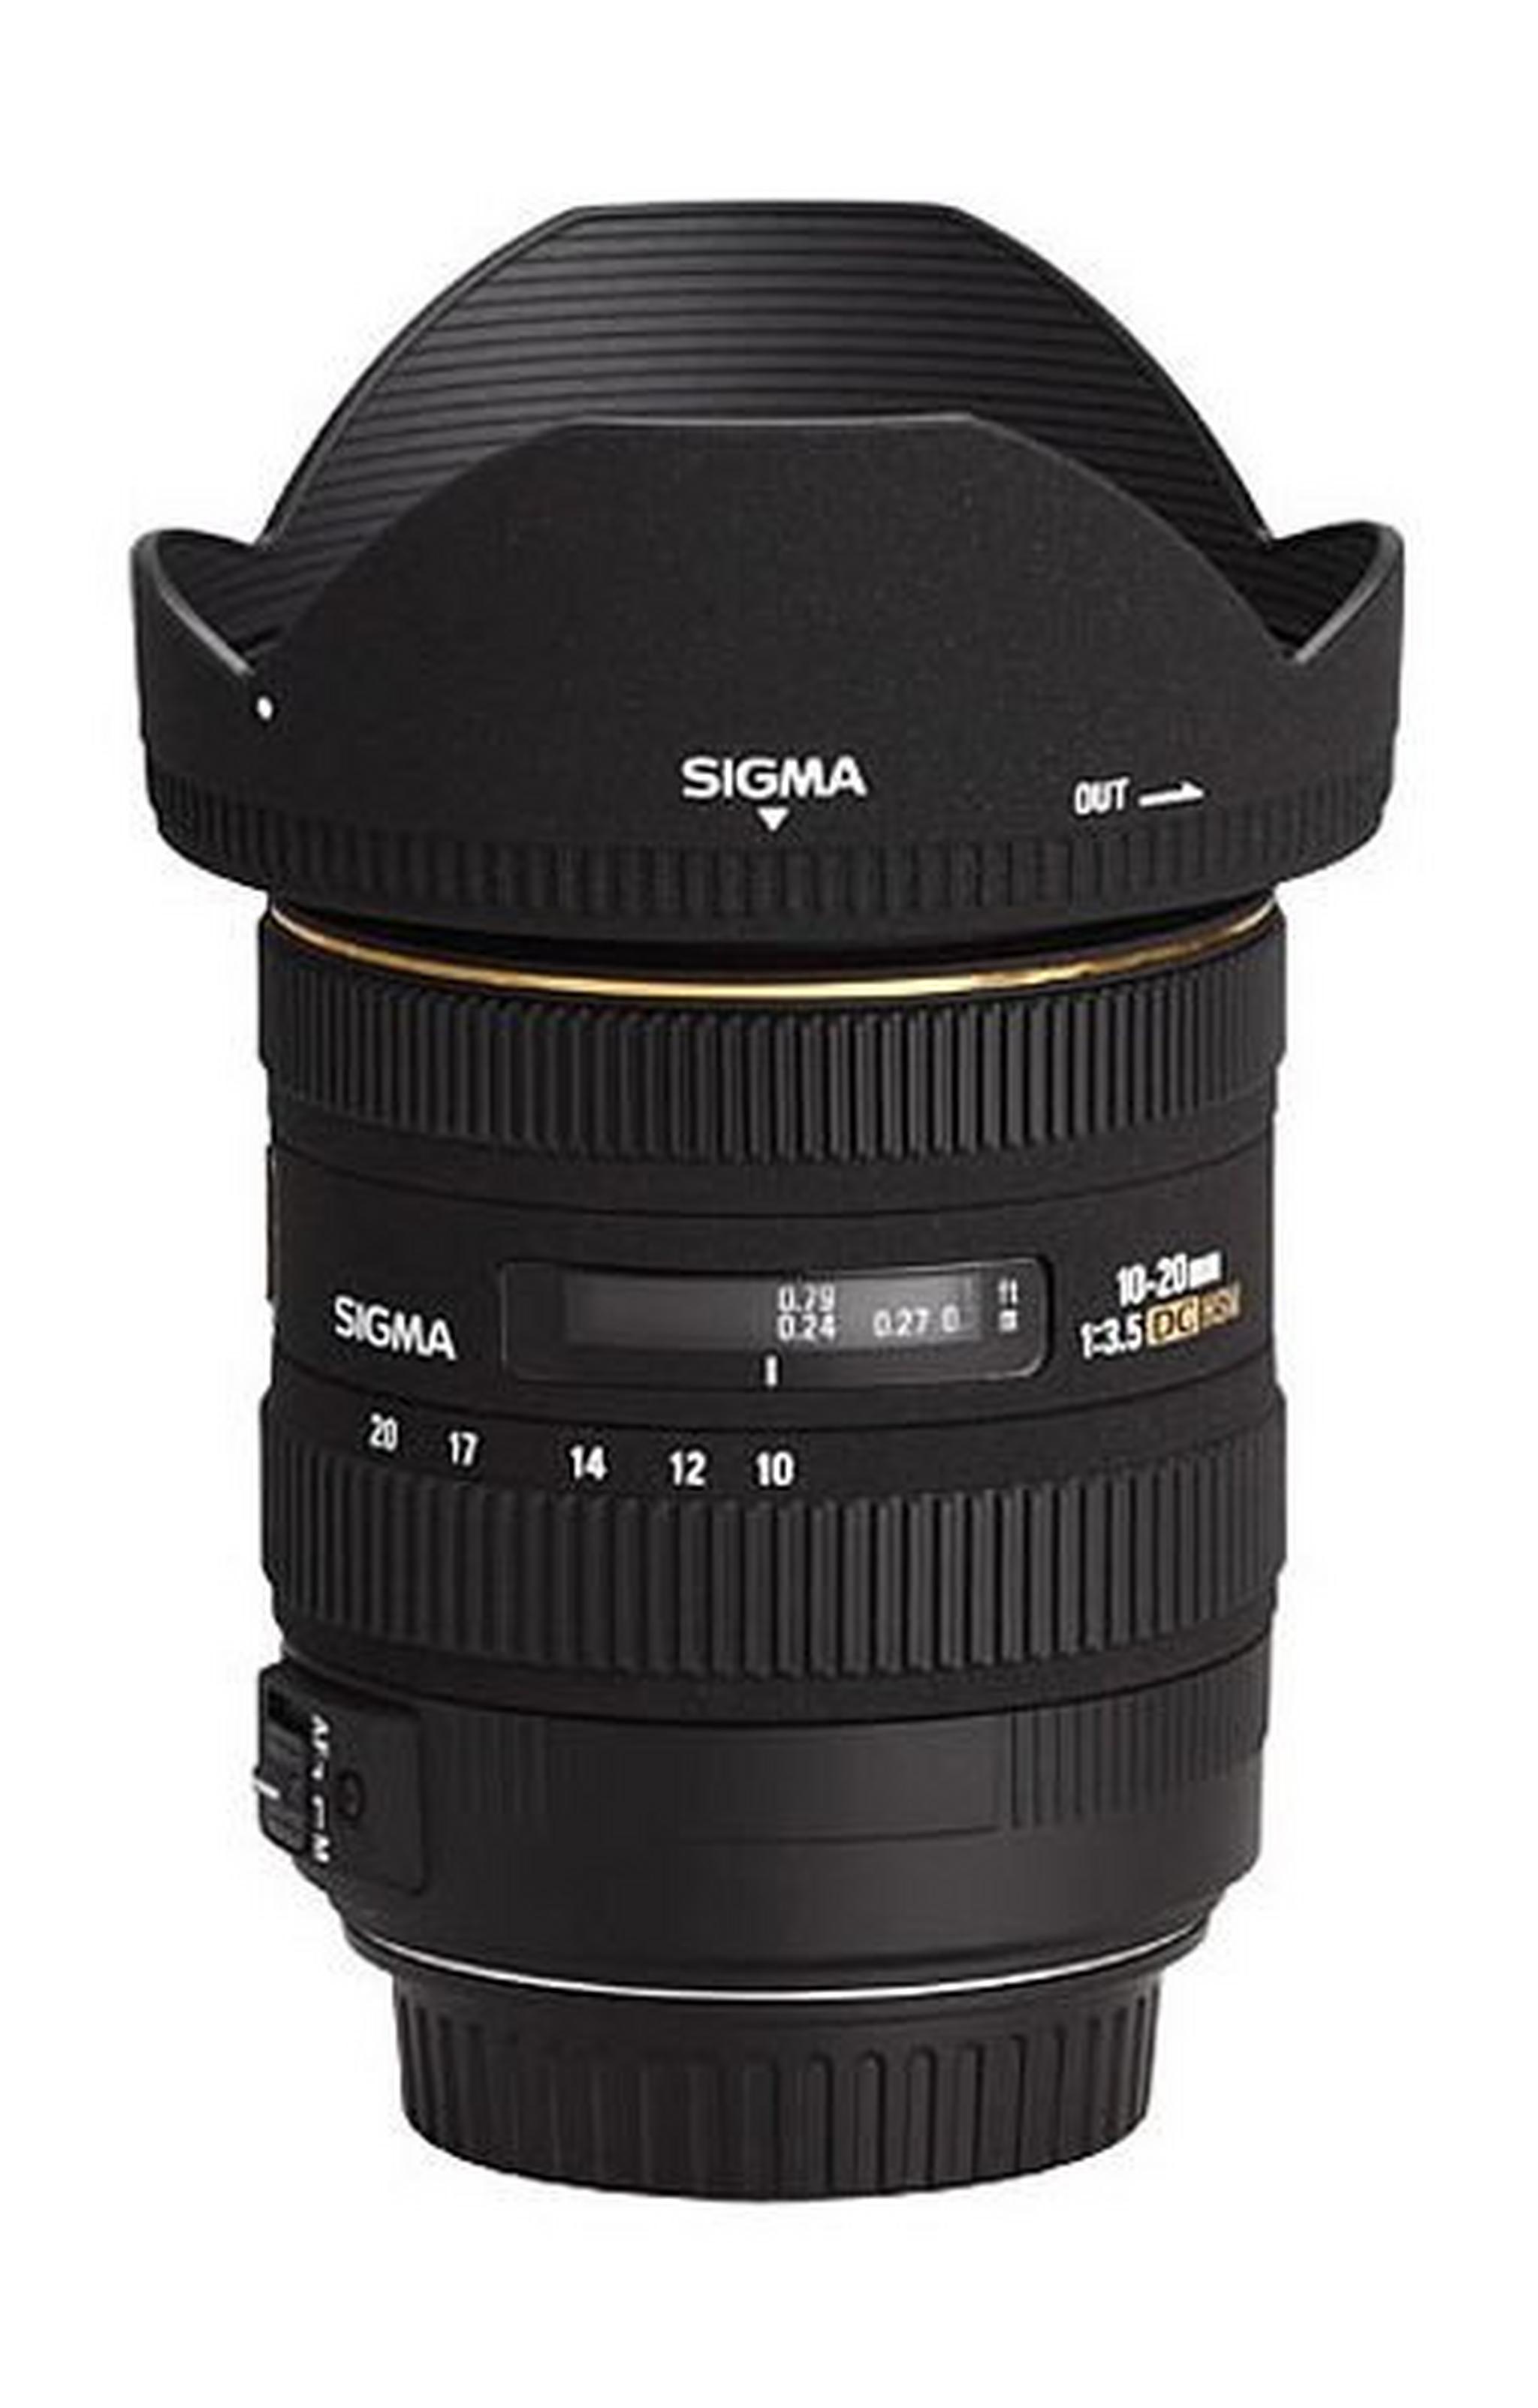 Sigma 10-20mm f/3.5 EX DC HSM Autofocus Wide-Angled Zoom Lens - Canon Mount